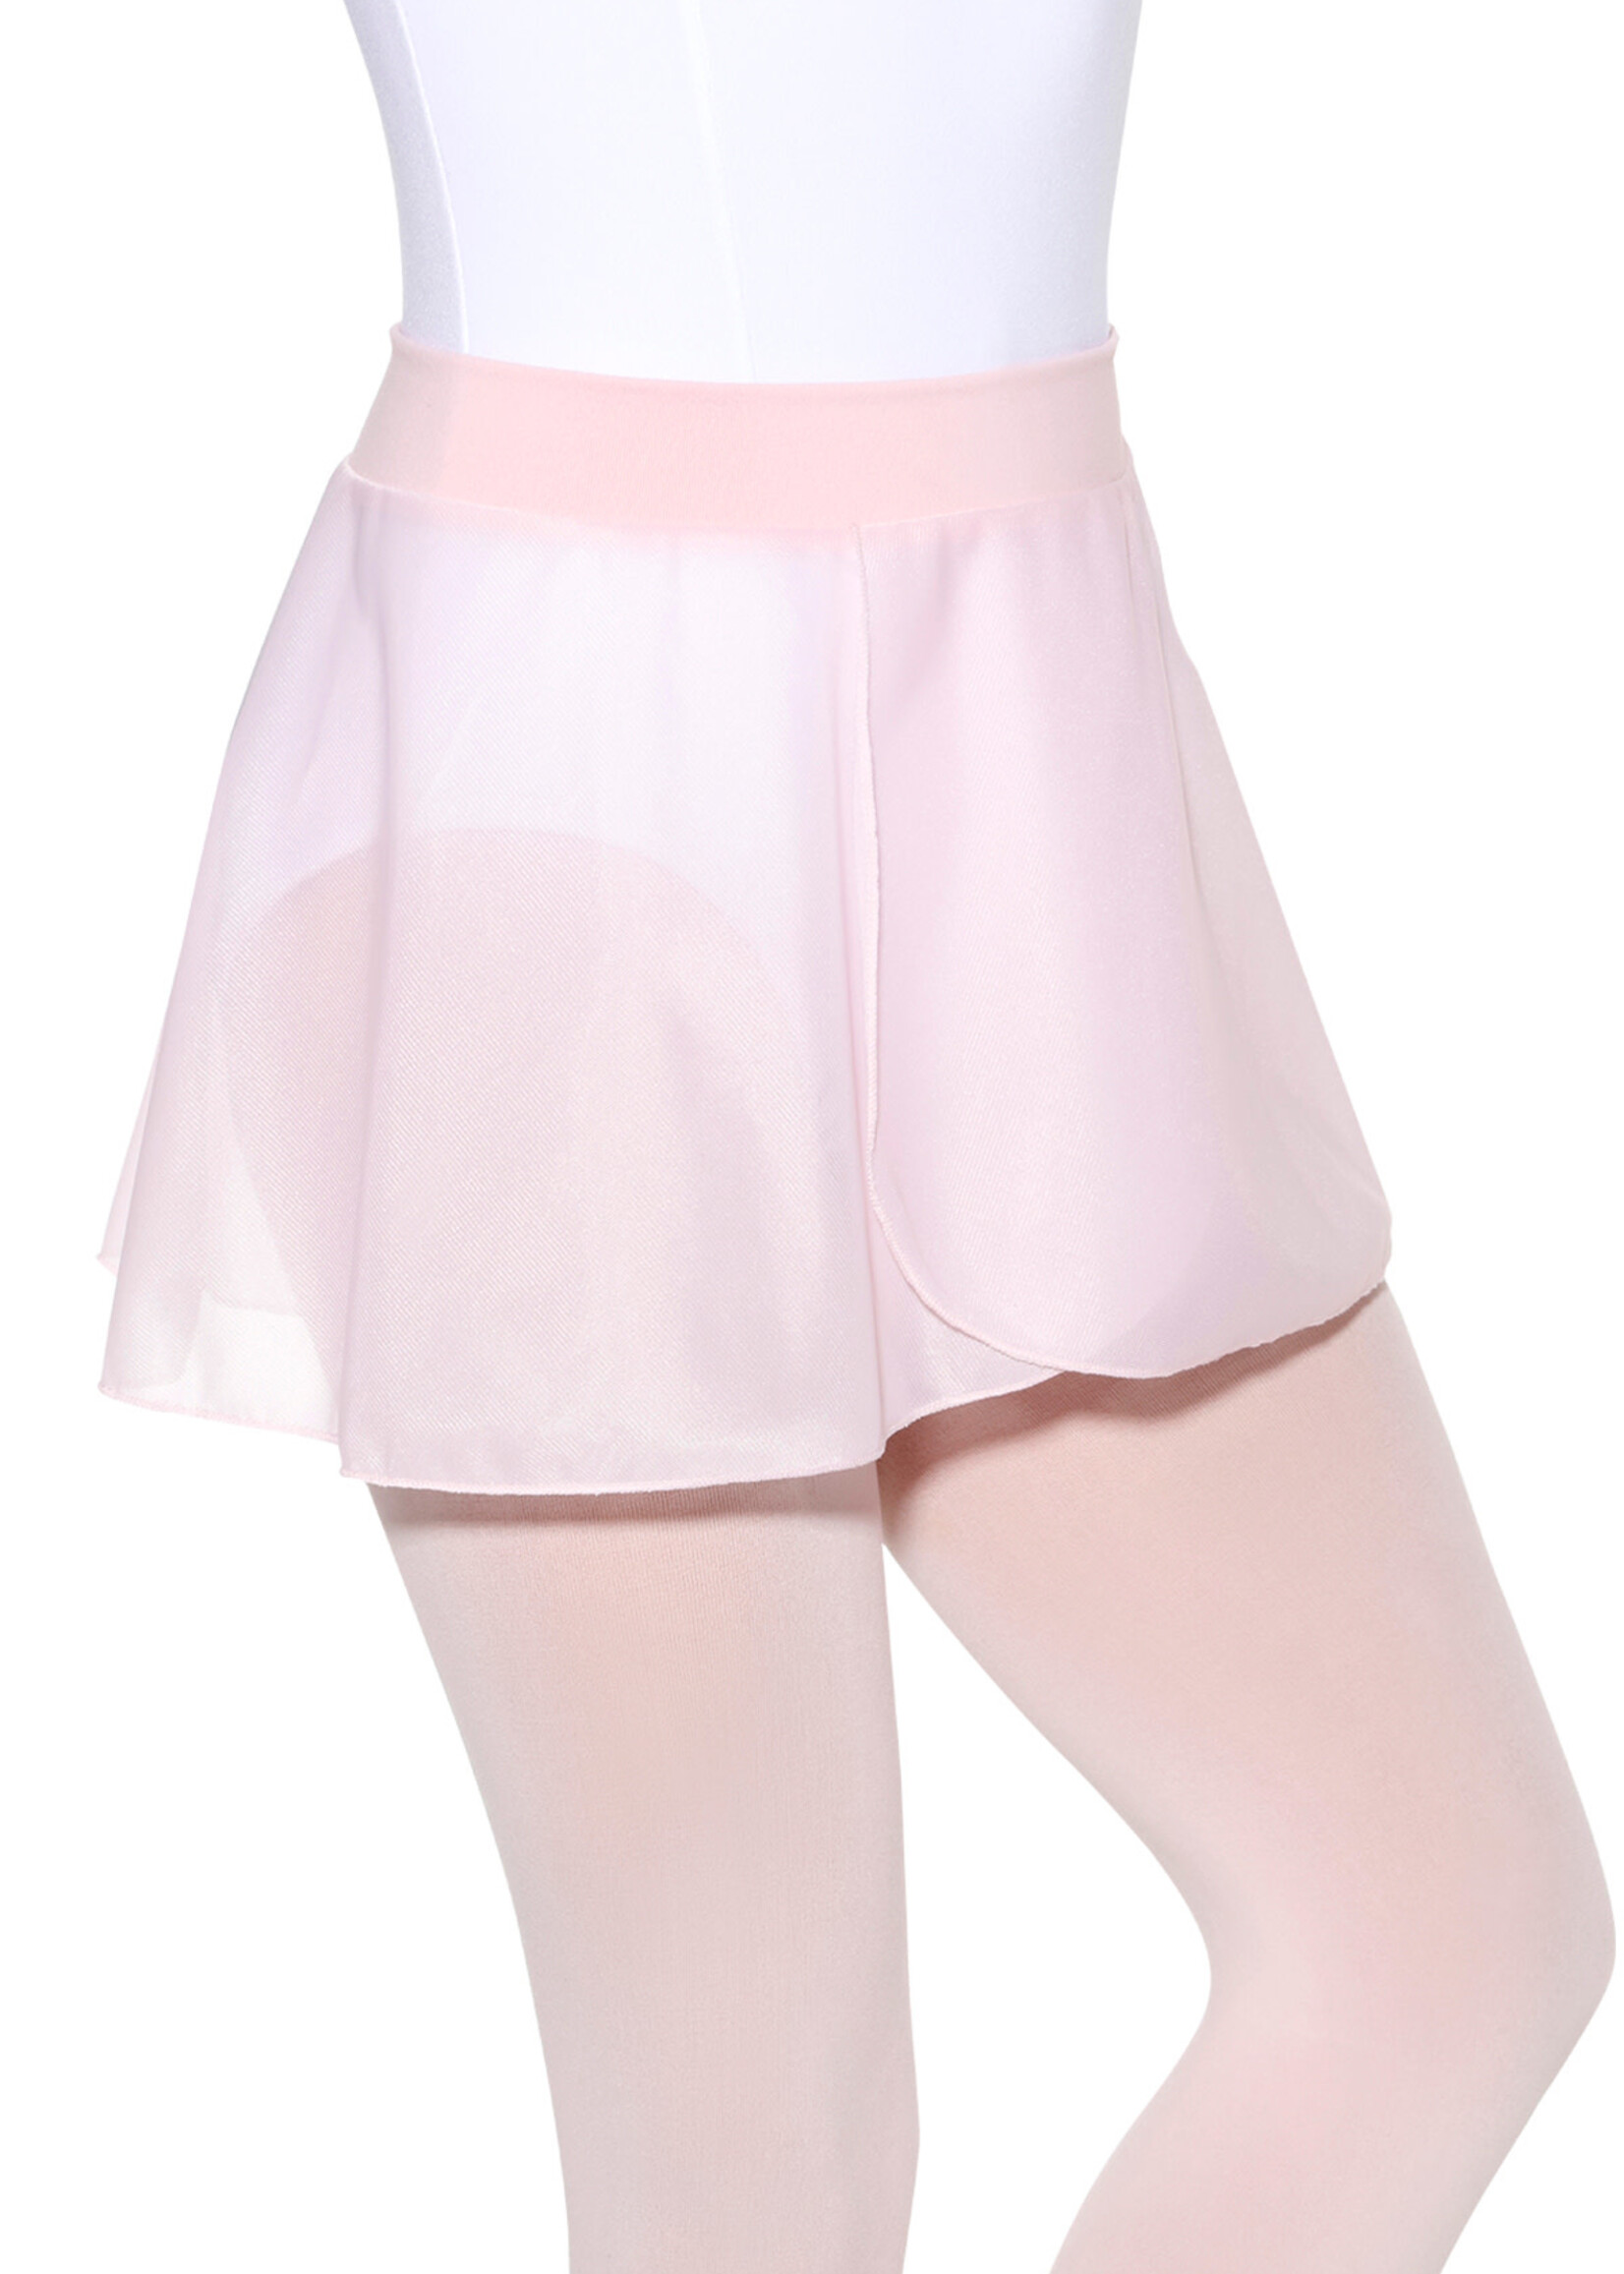 Eurotard SL61 Child pull on, sheer mock wrap skirt with cotton Lycra waistband.